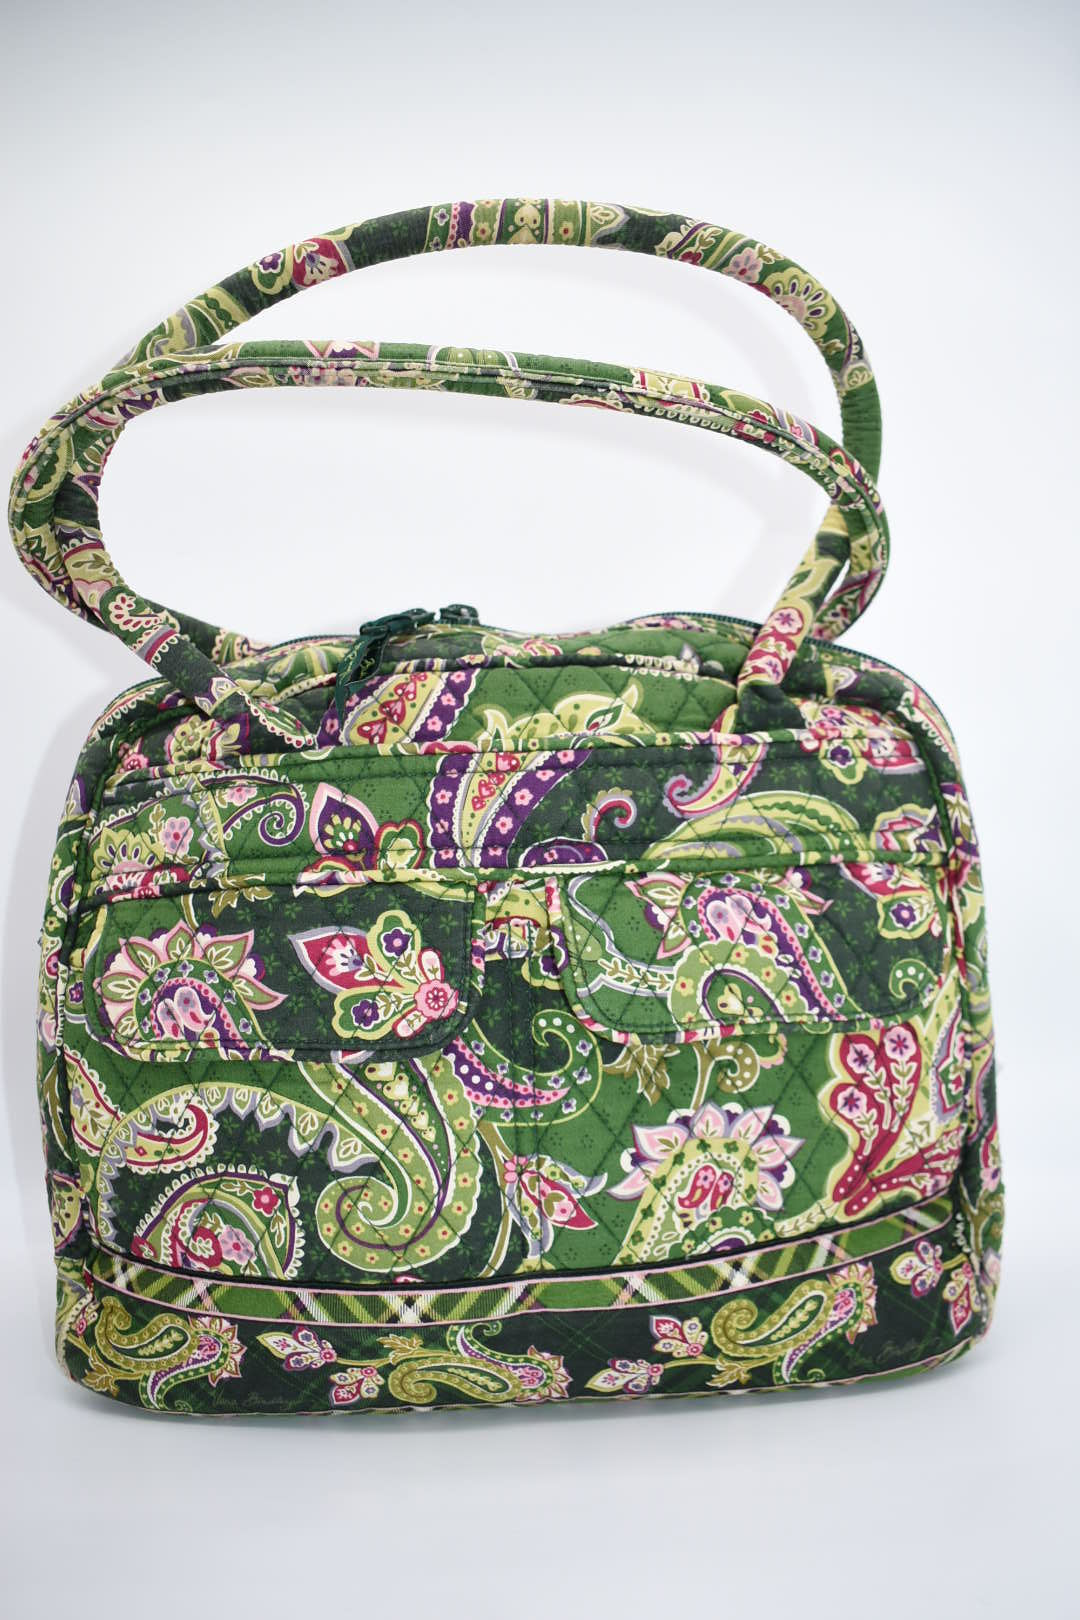 Vera Bradley Bowler Bag in "Chelsea Green" Pattern